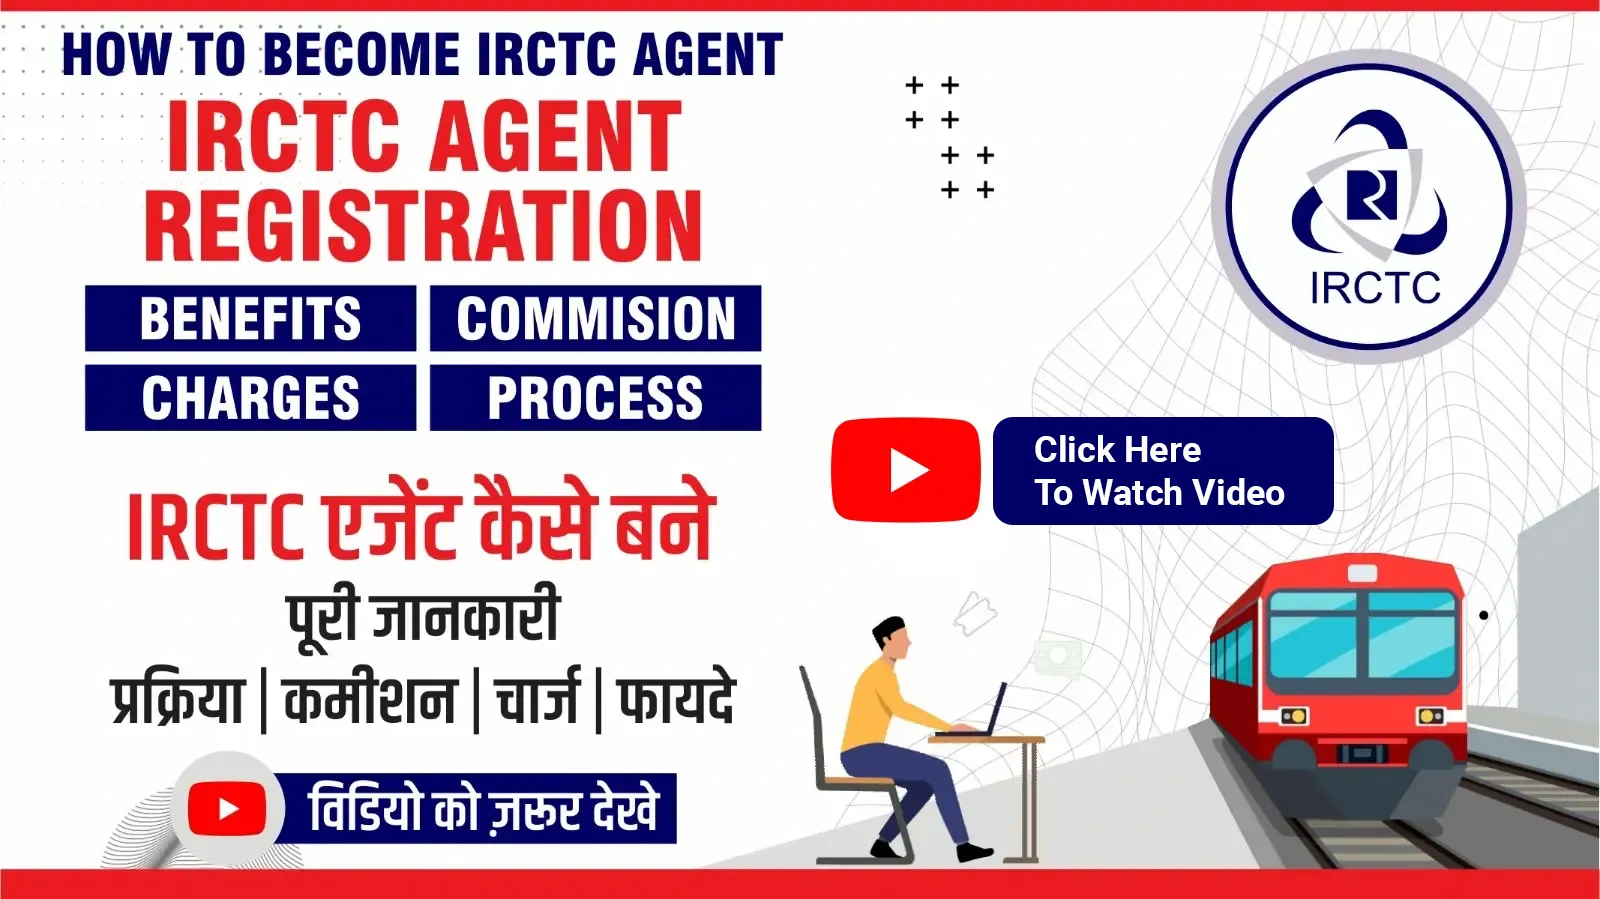 irctc agent registration